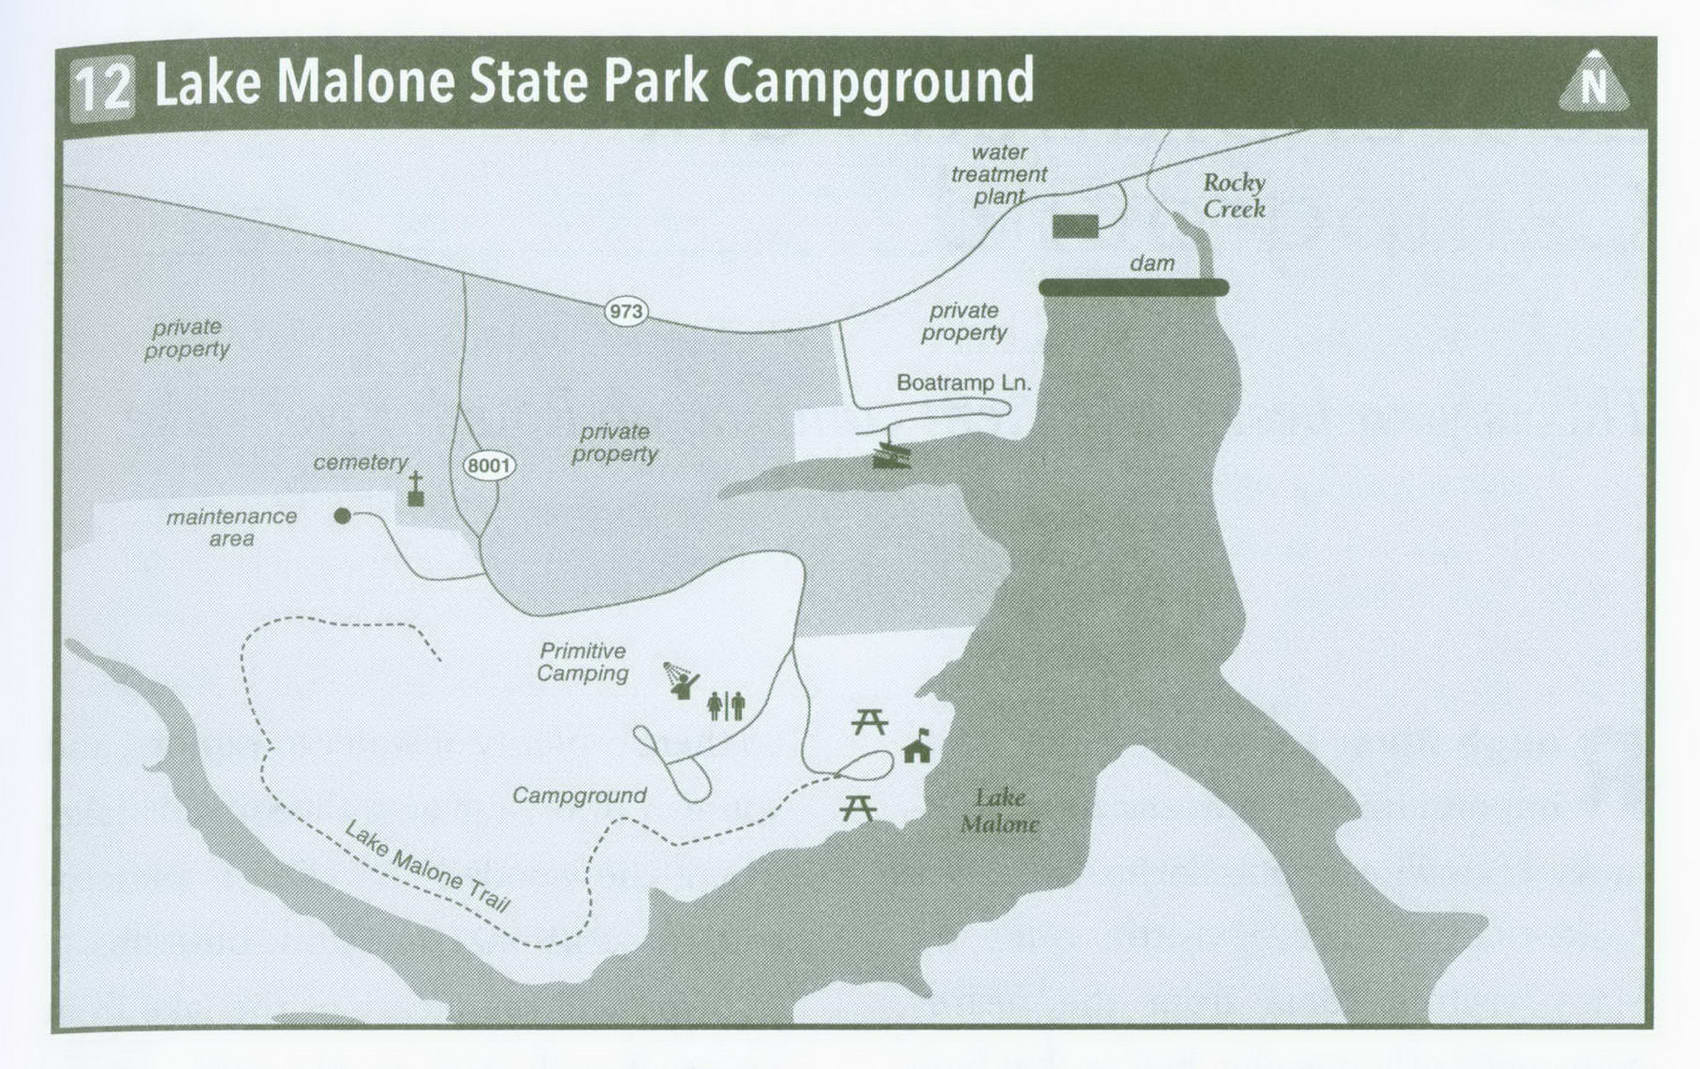 Plan of Lake Malone State Park Campground